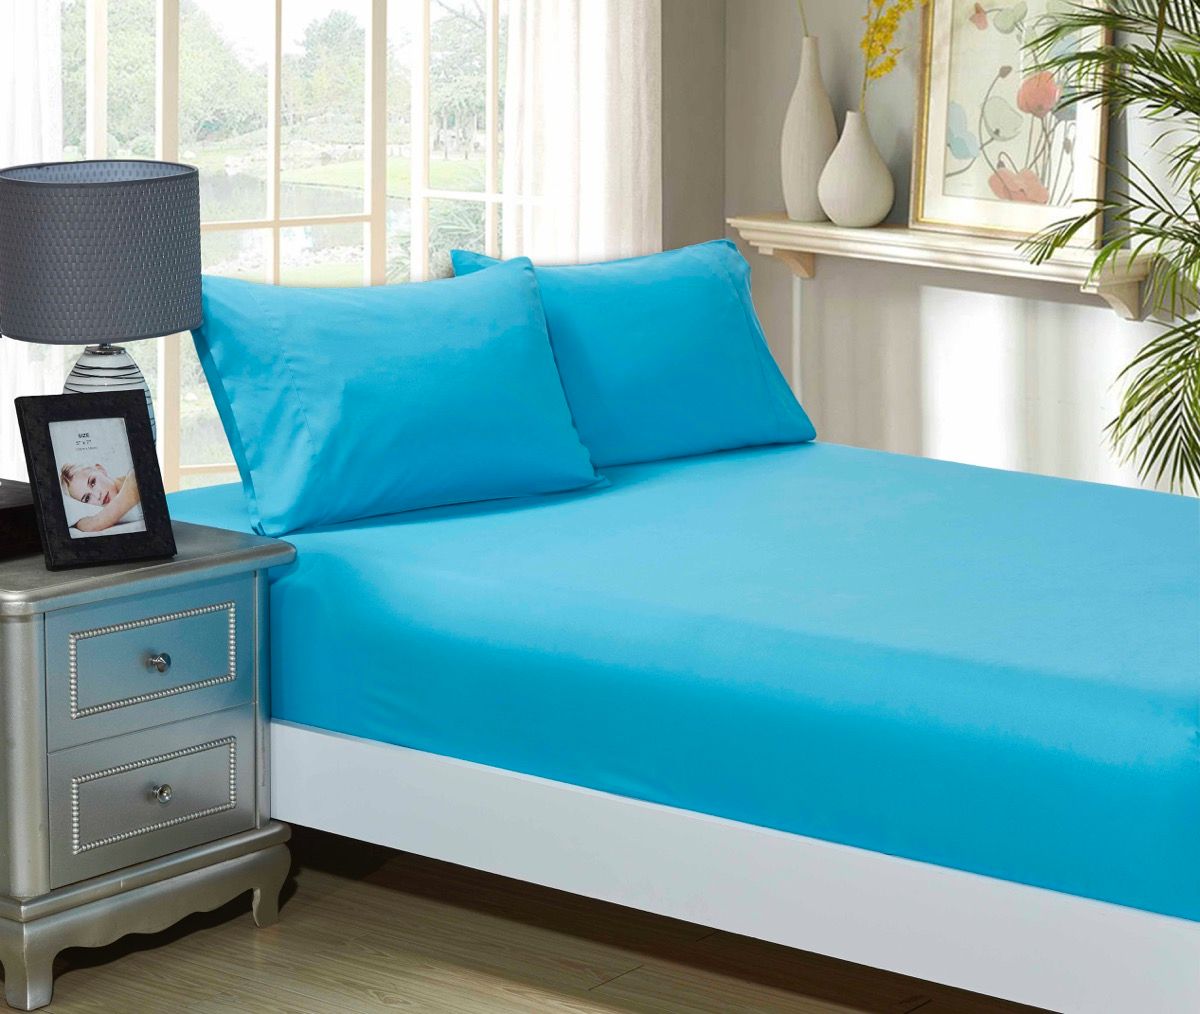 Super Soft 3-Piece Queen Size Bed Fitted Sheet & 2 Pillowcases Set - Light Blue